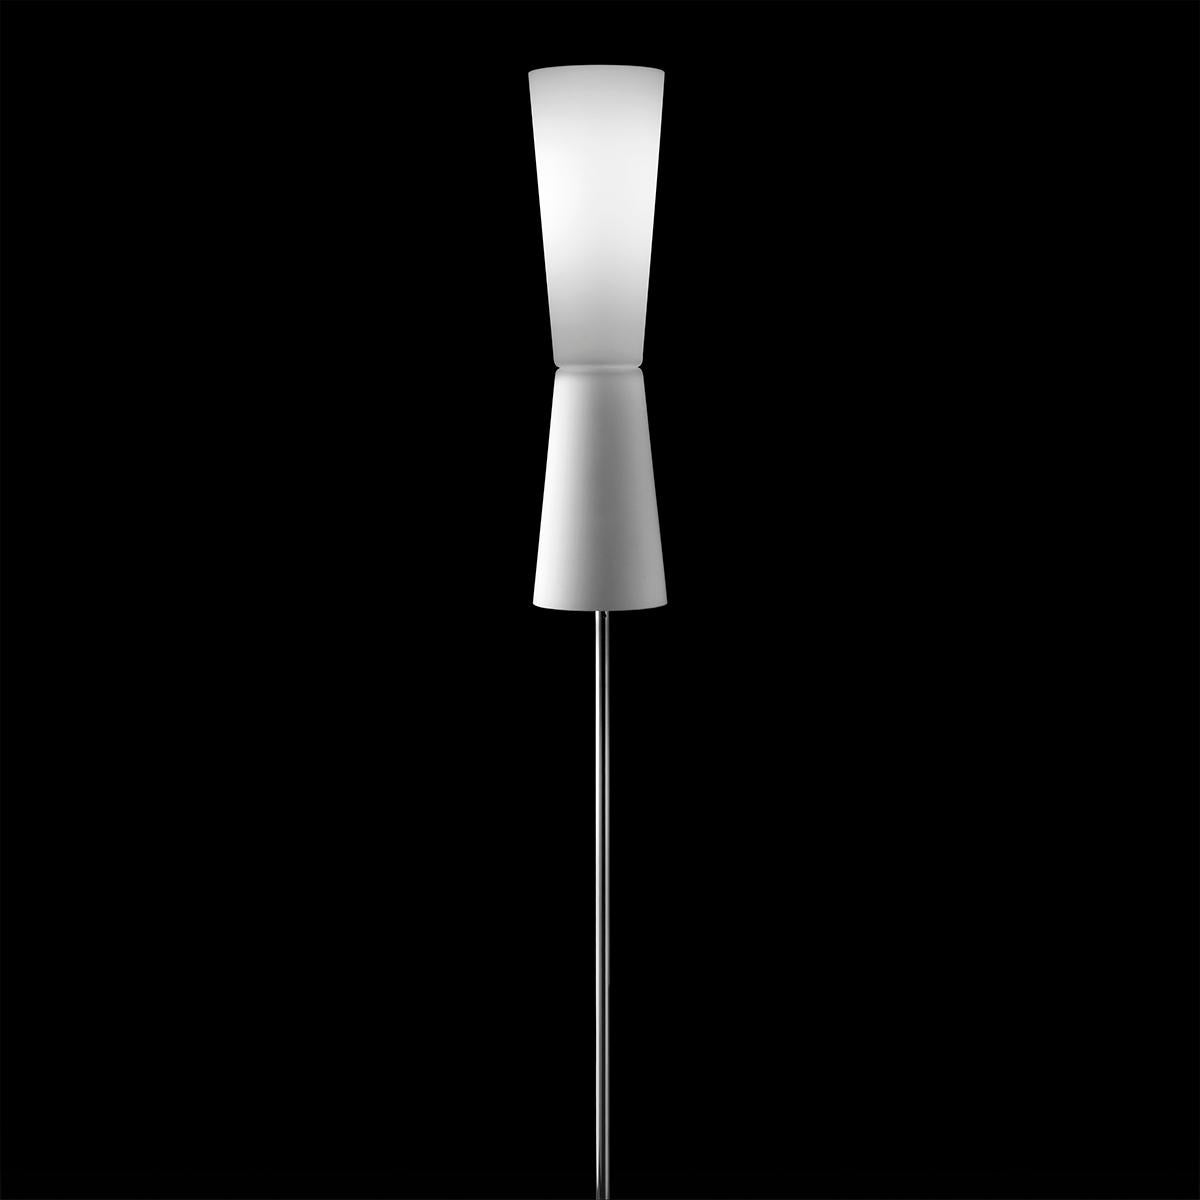 Italian Stefano Casciani Floor Lamp 'Lu-Lu' Murano Glass and Metal by Oluce For Sale